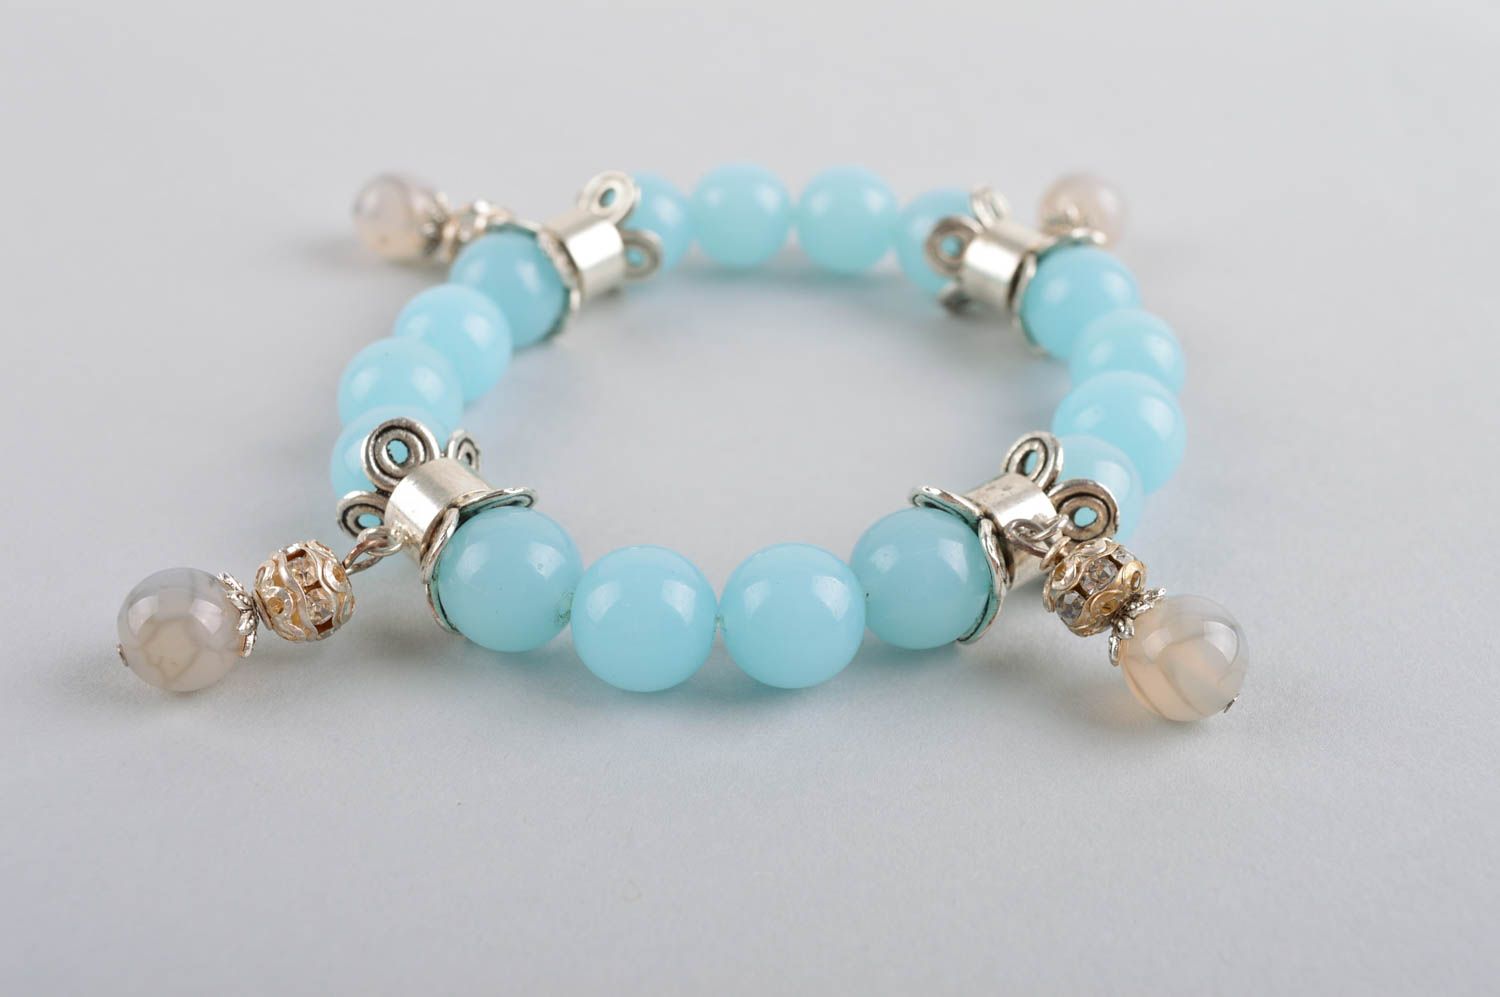 Handmade bracelet bead bracelet gemstone jewelry fashion accessories gift ideas photo 4